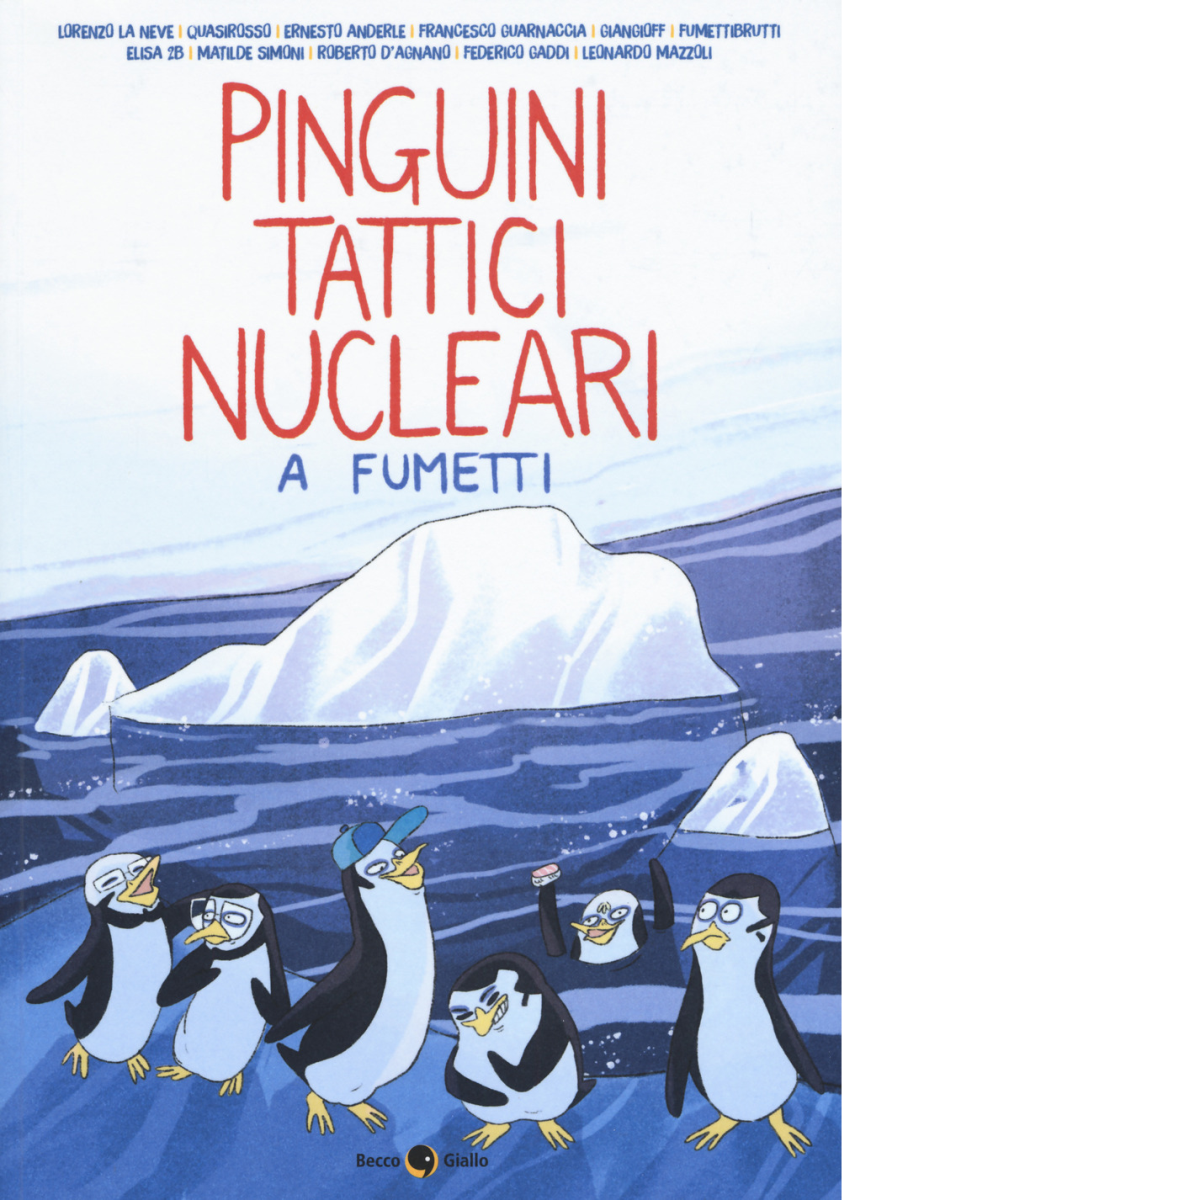 Pinguini tattici nucleari a fumetti di Aa.vv.,  2019,  Becco Giallo